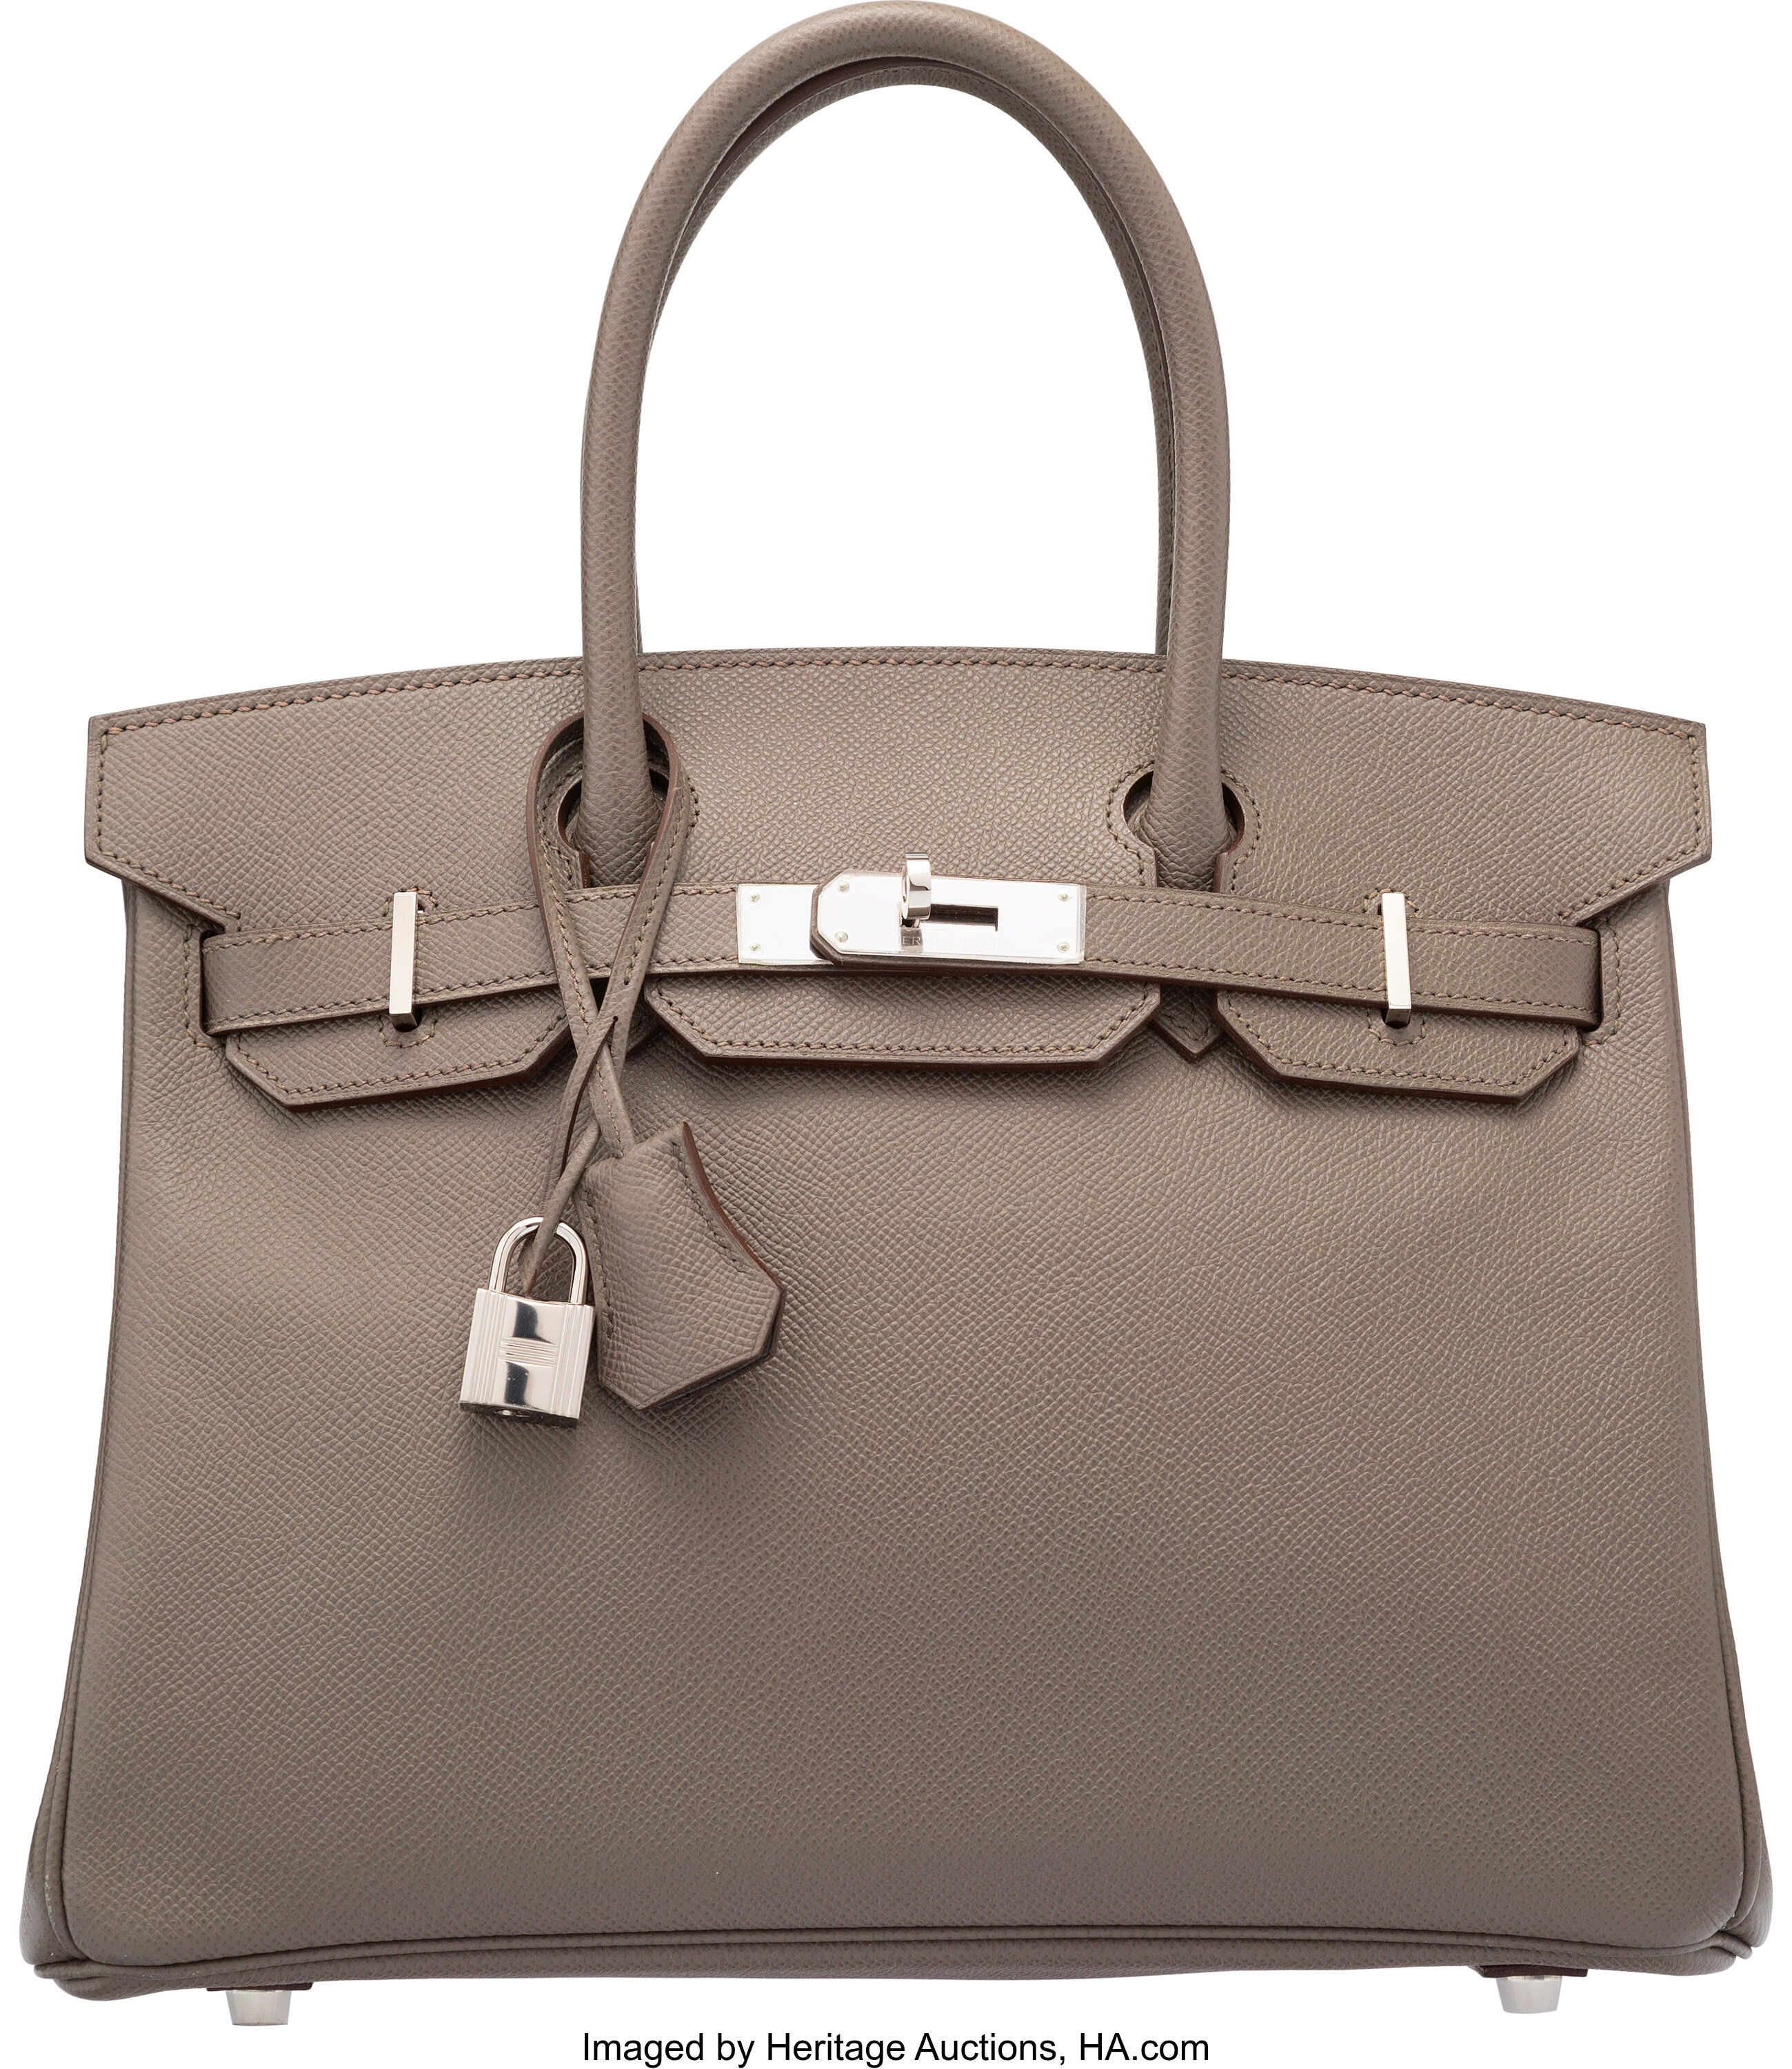 Hermes 30cm Etain Epsom Leather Birkin Bag with Palladium Hardware., Lot  #58120